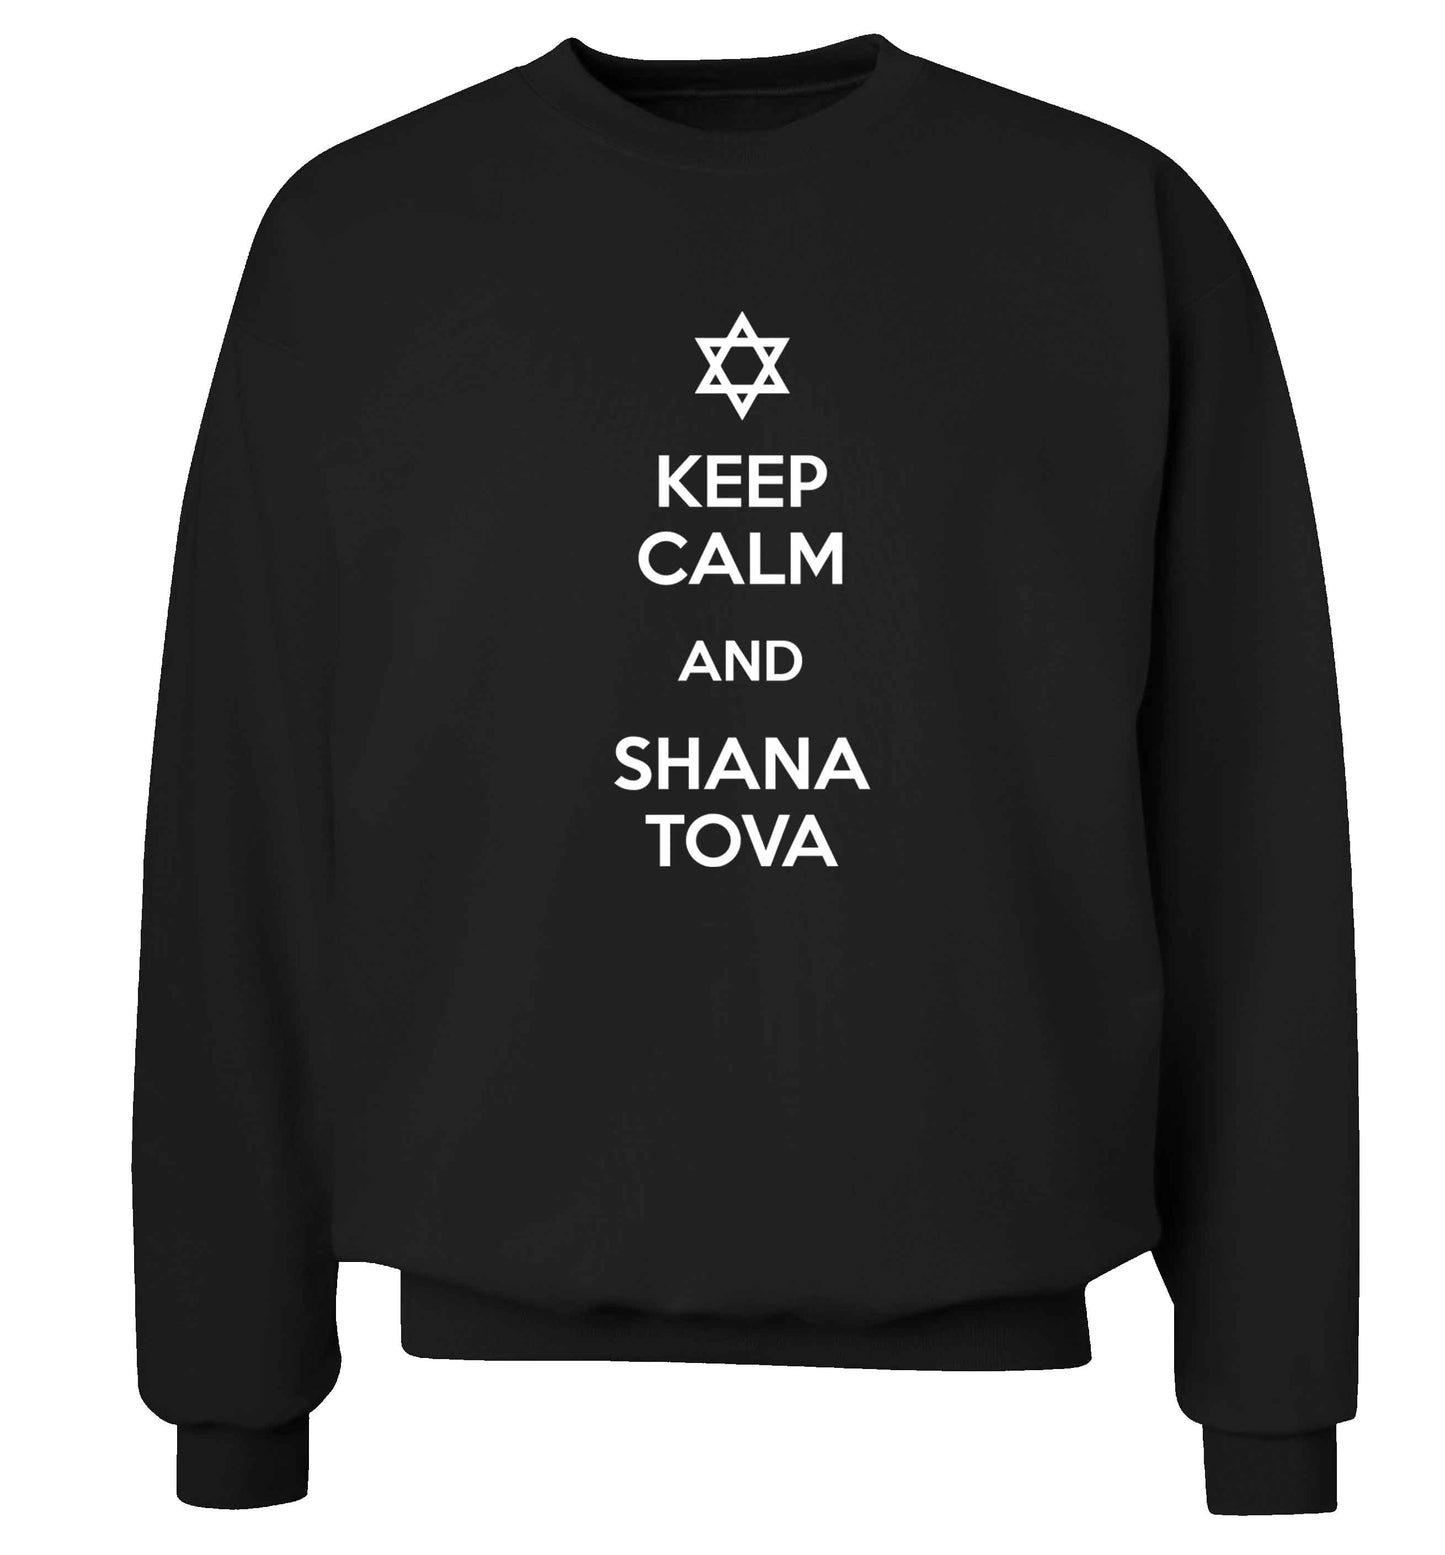 Keep calm and shana tova Adult's unisex black Sweater 2XL